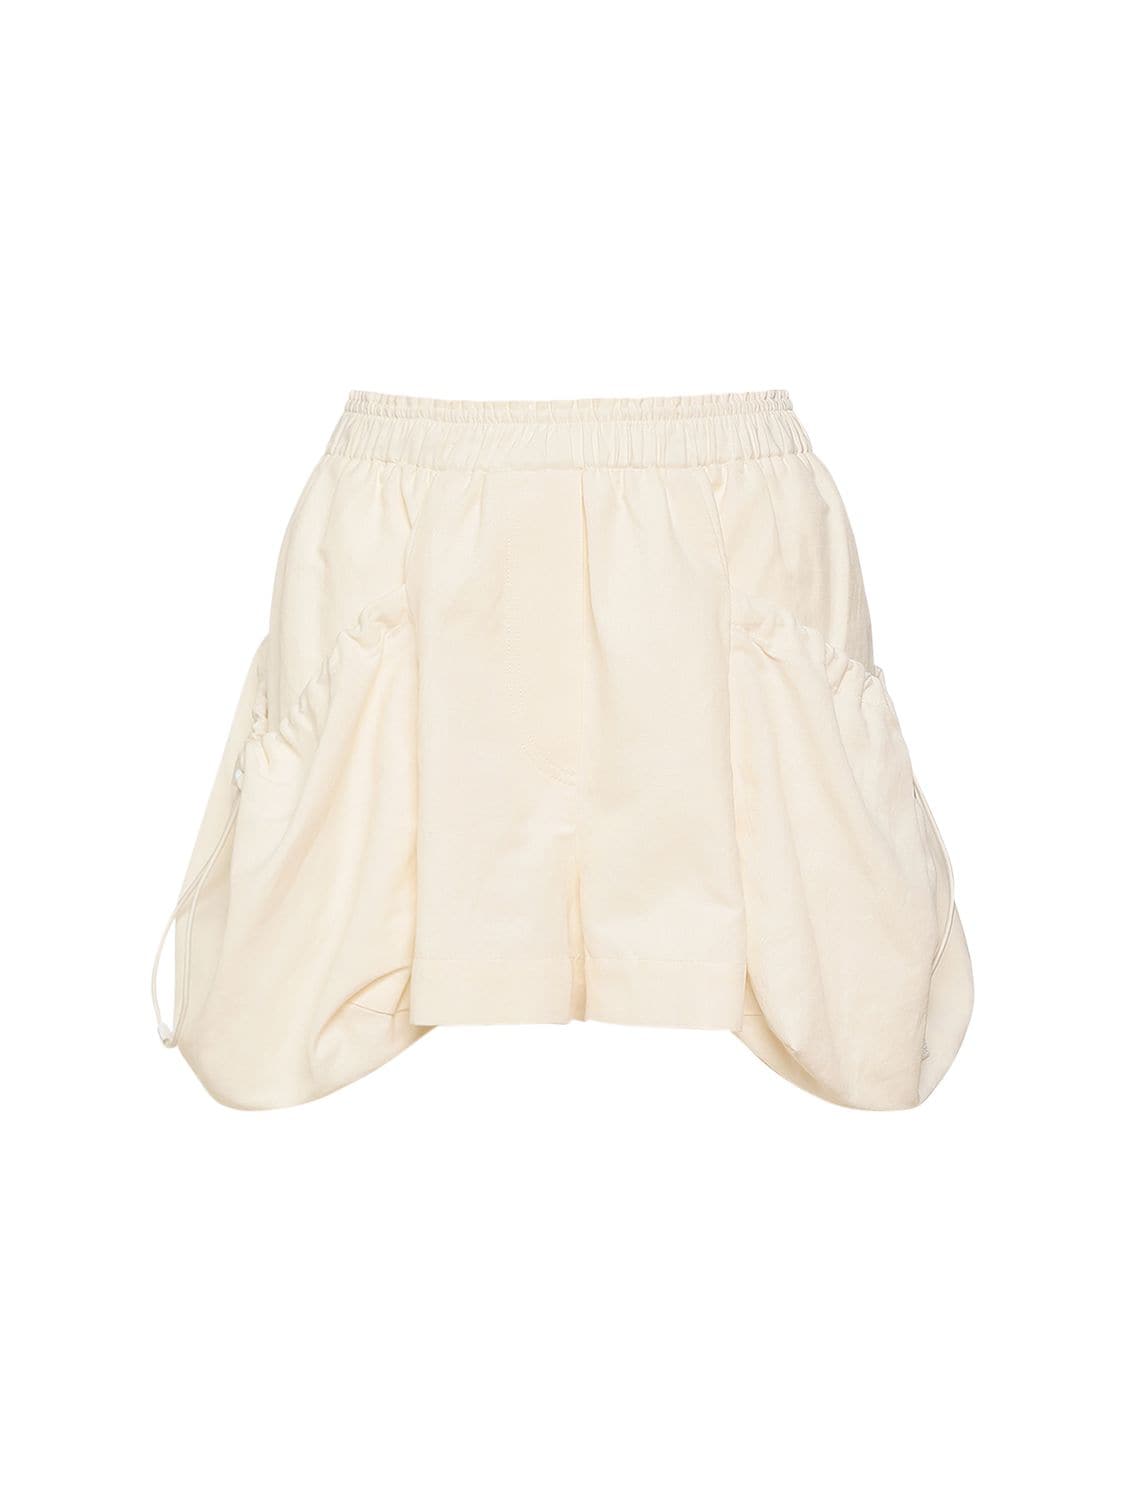 Stella McCartney Cotton Blend Shorts